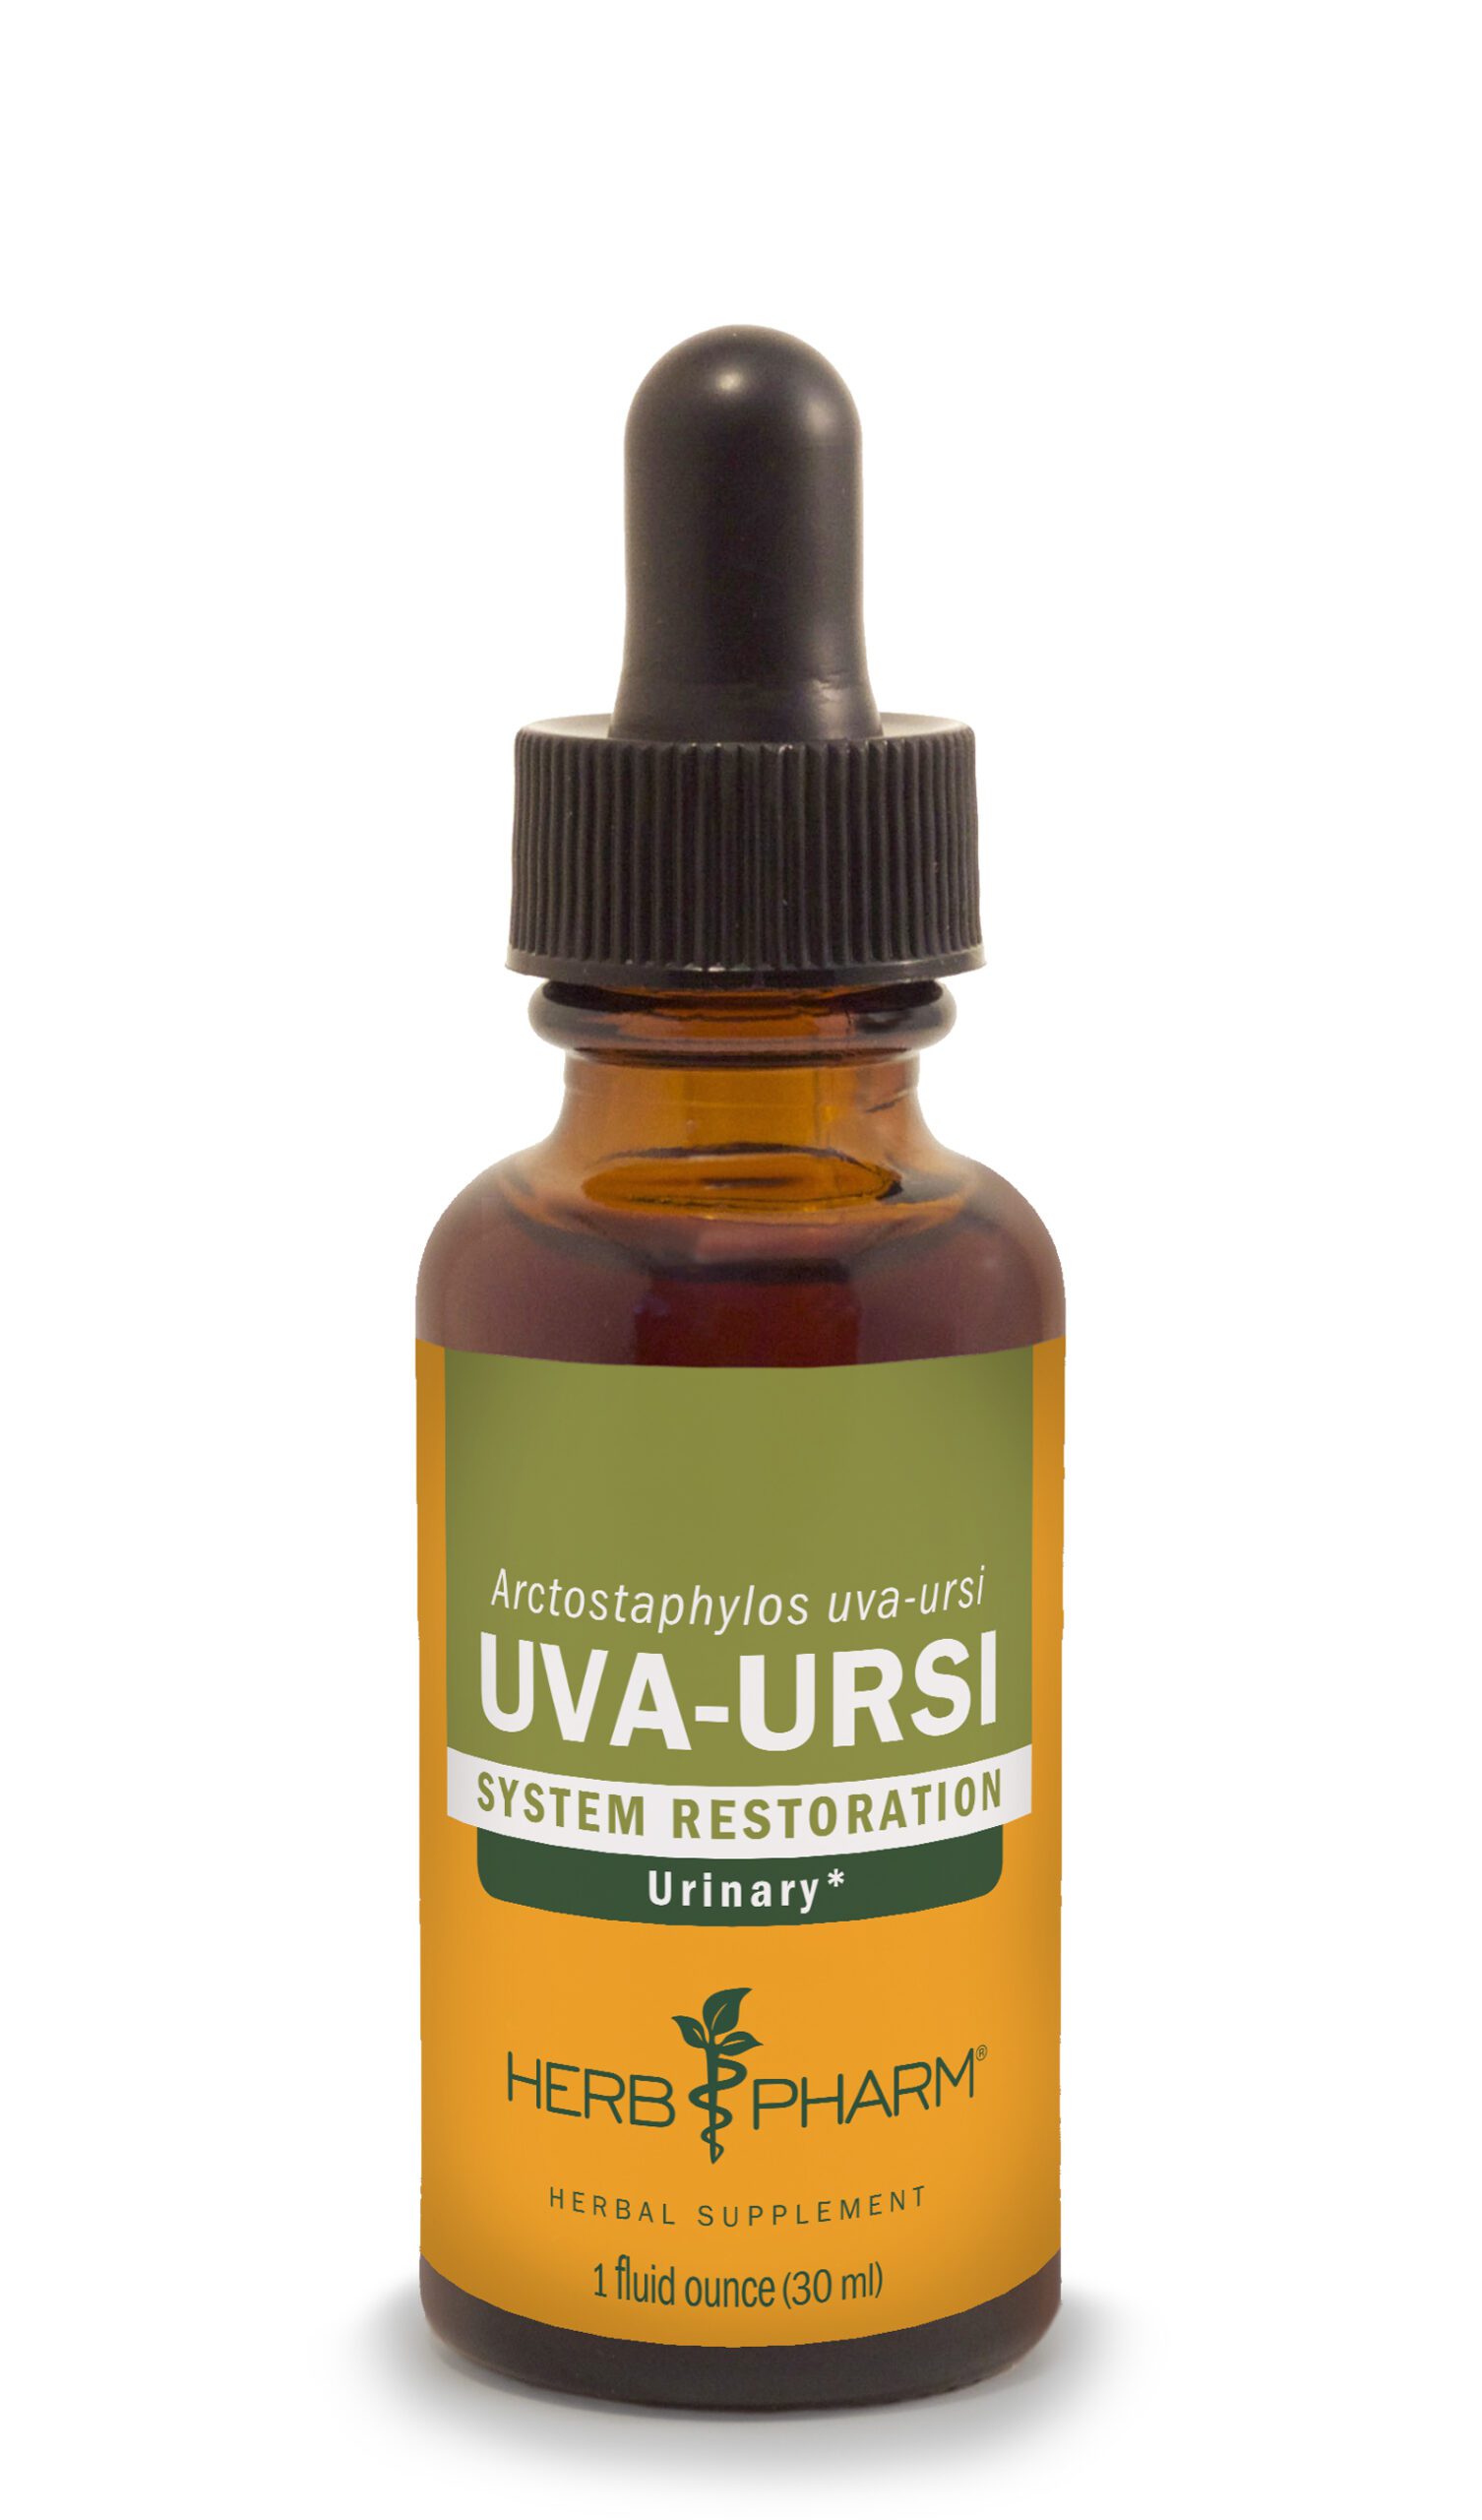 Product Listing Image for Uva-Ursi Tincture 1oz